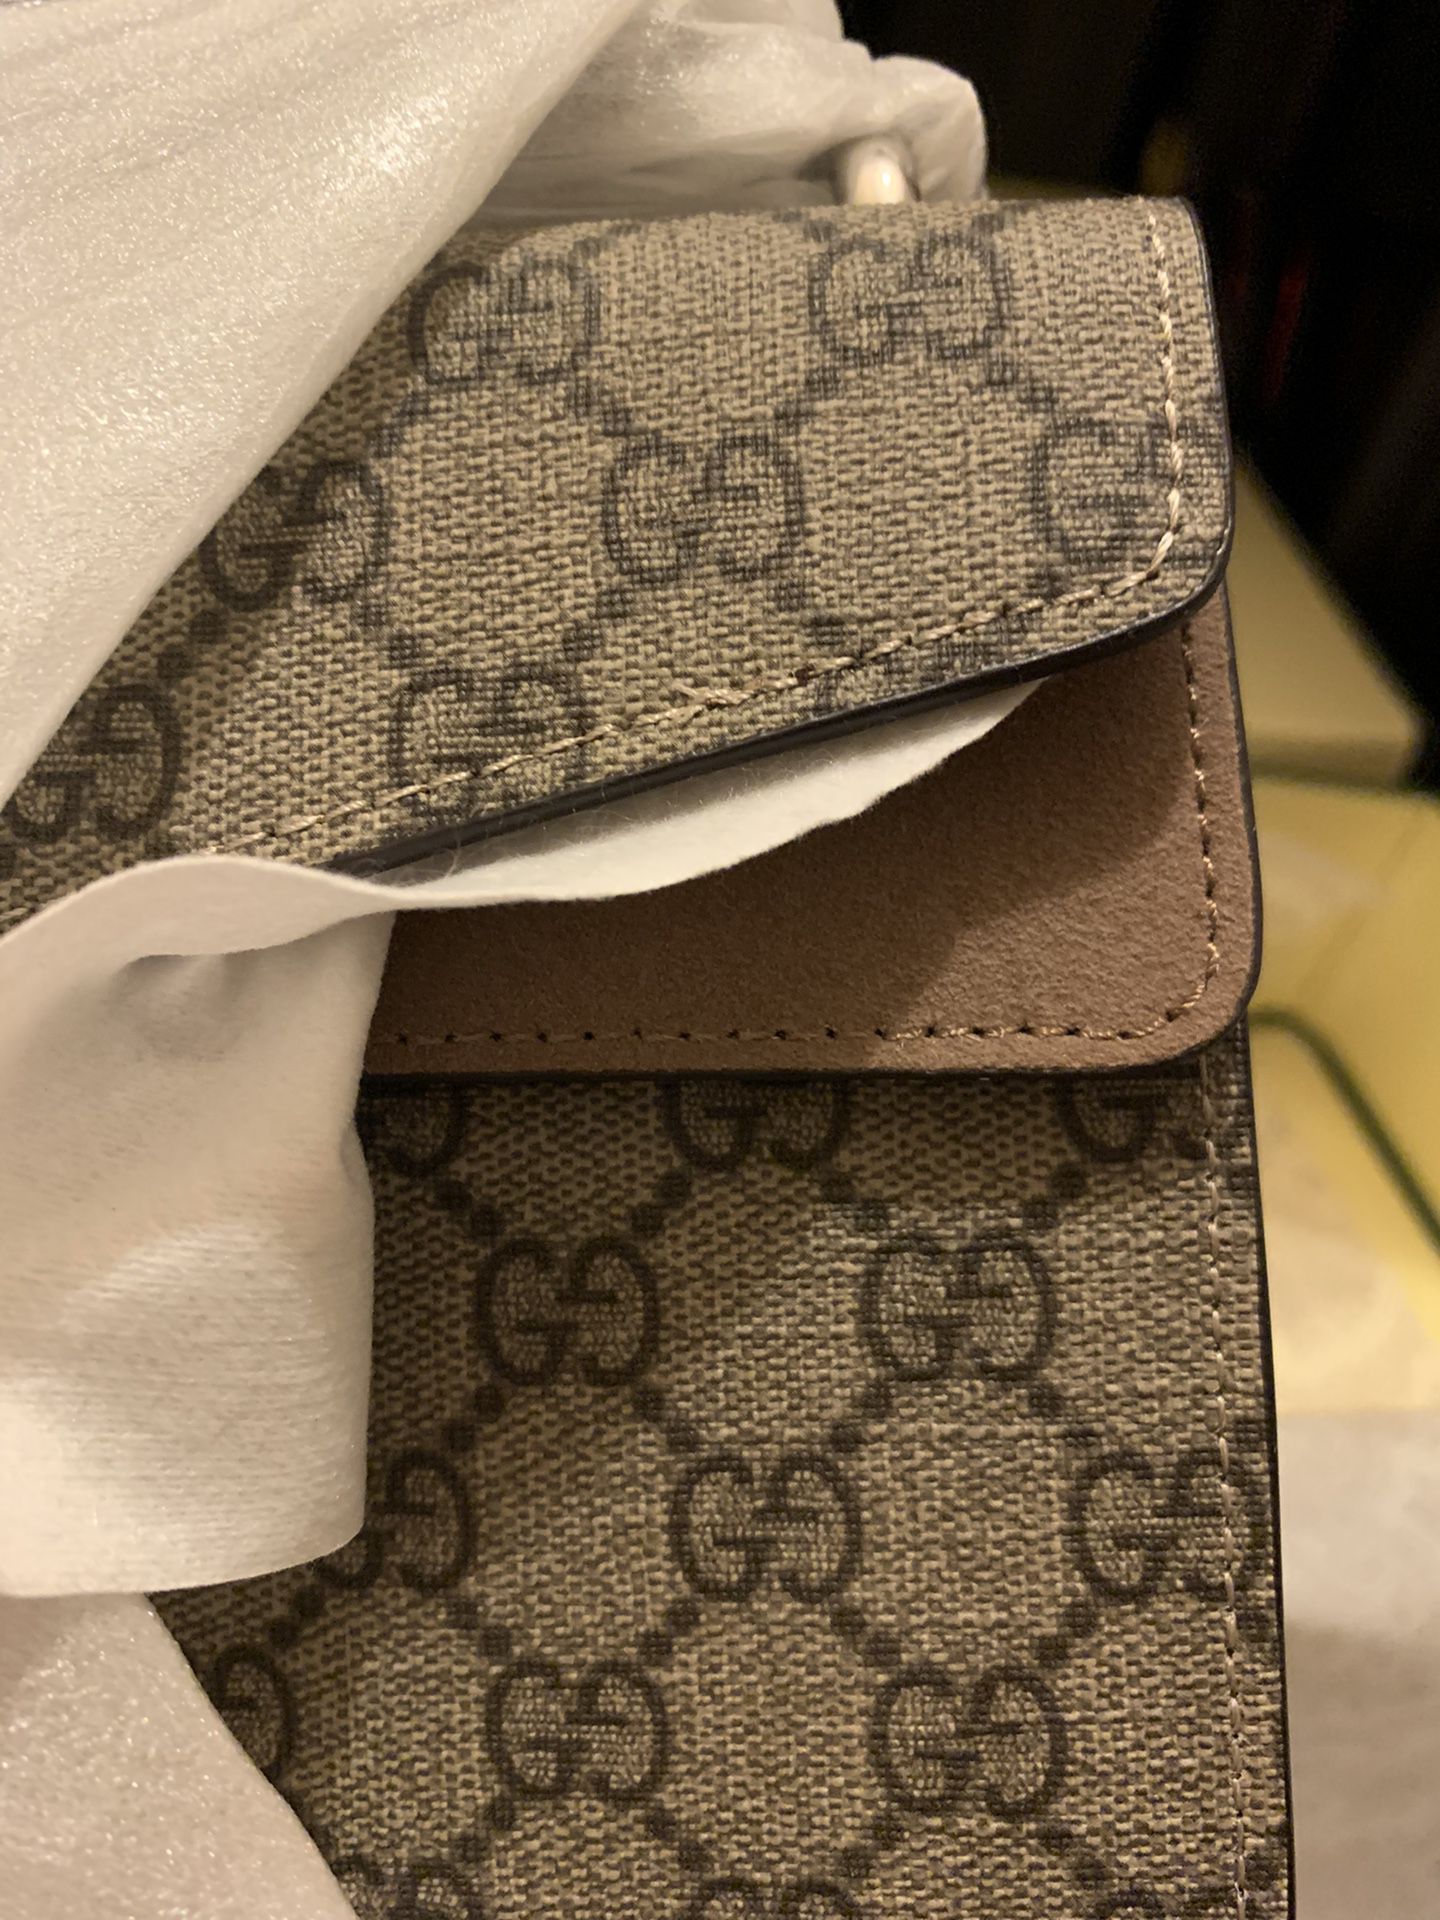 Brand New Gucci Bag